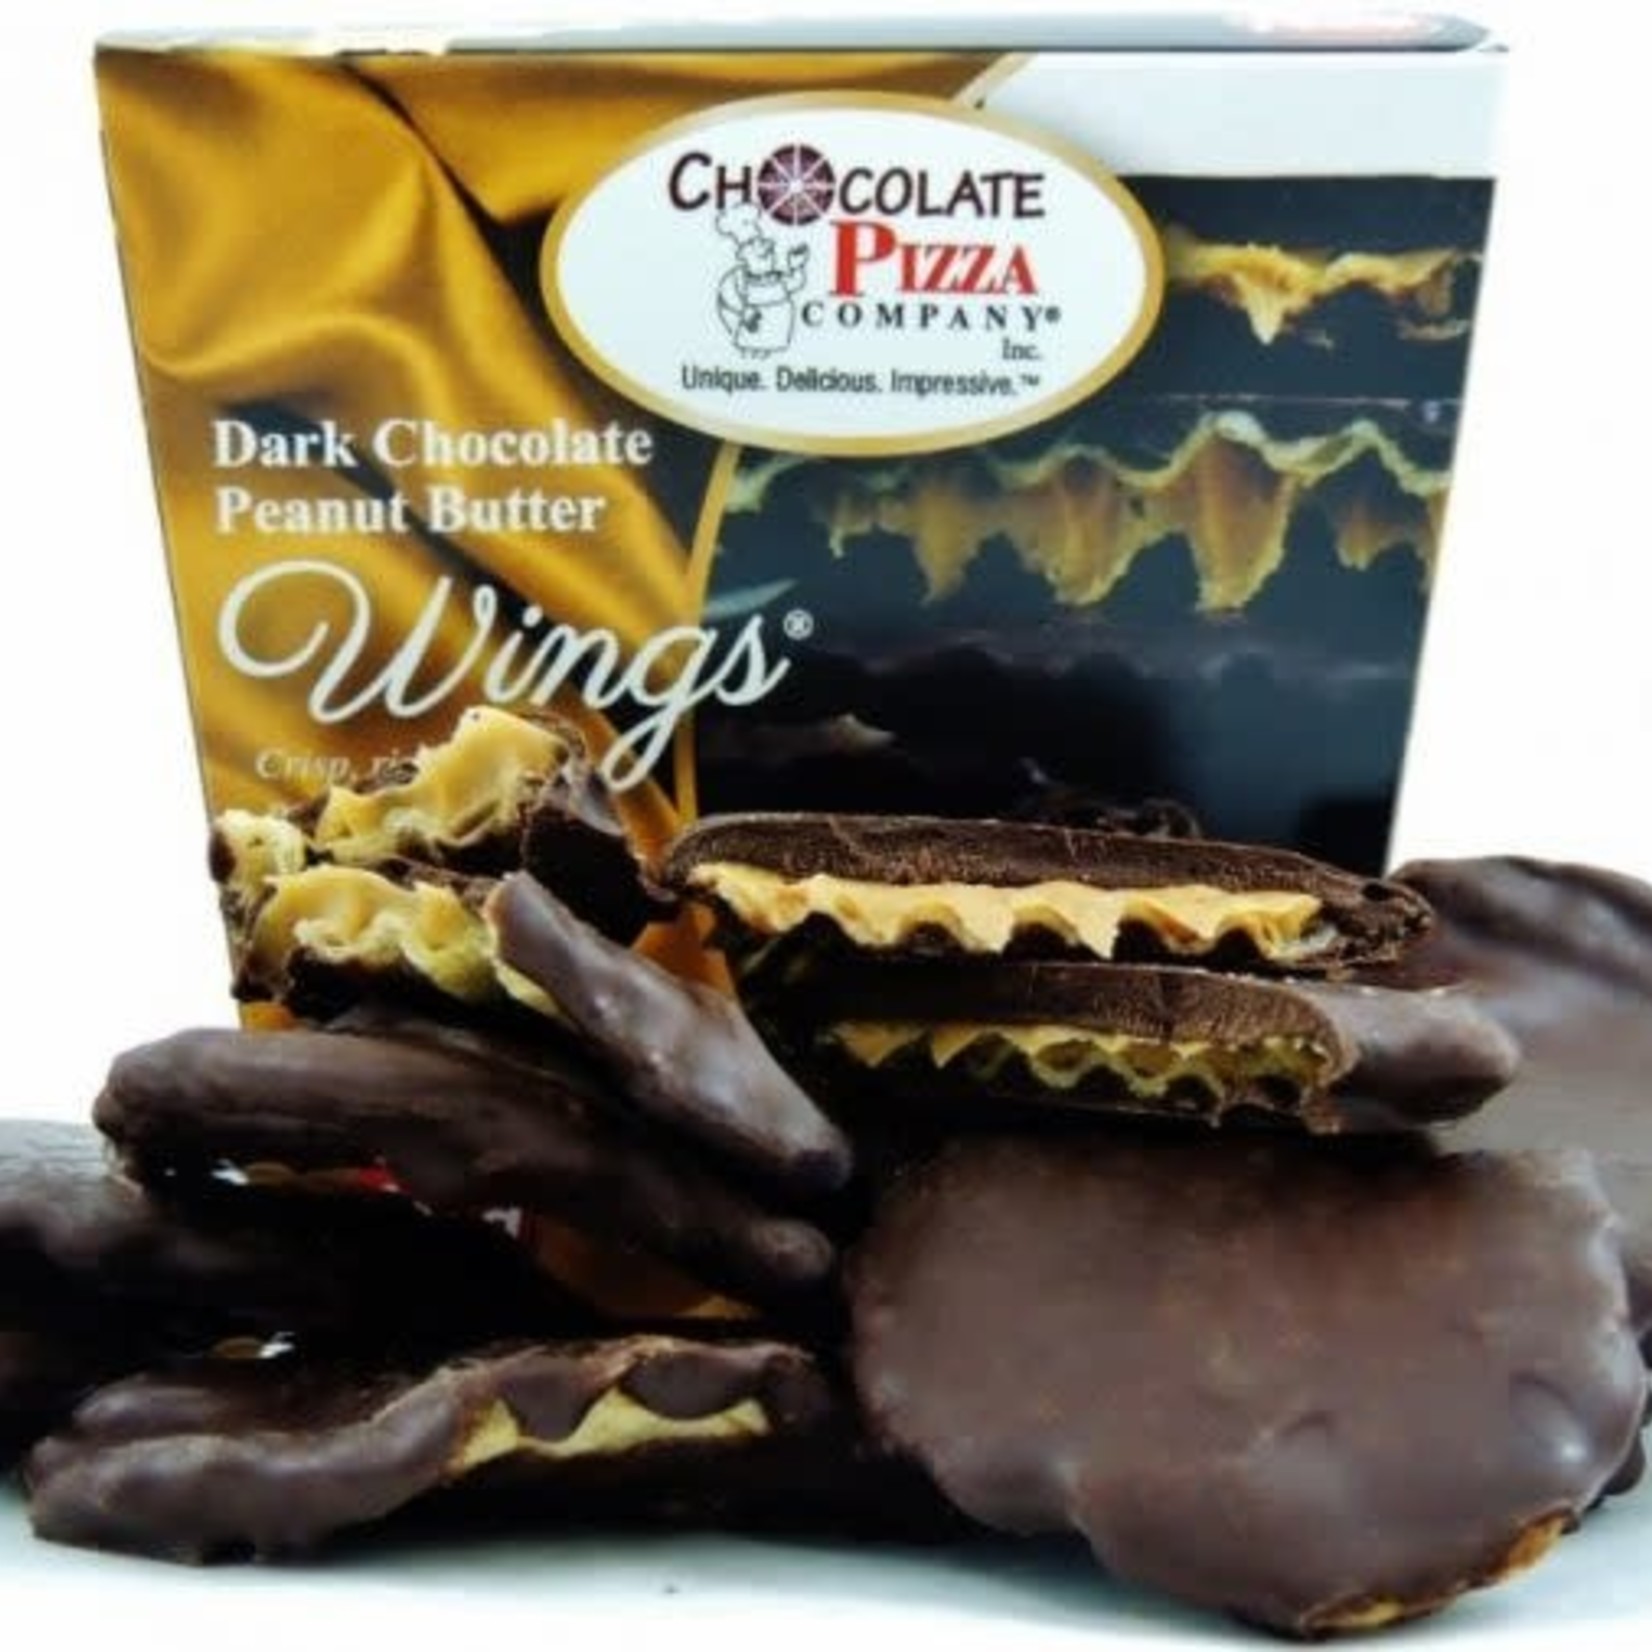 Chocolate Pizza Company Peanut Butter Wings 8oz. - Dark